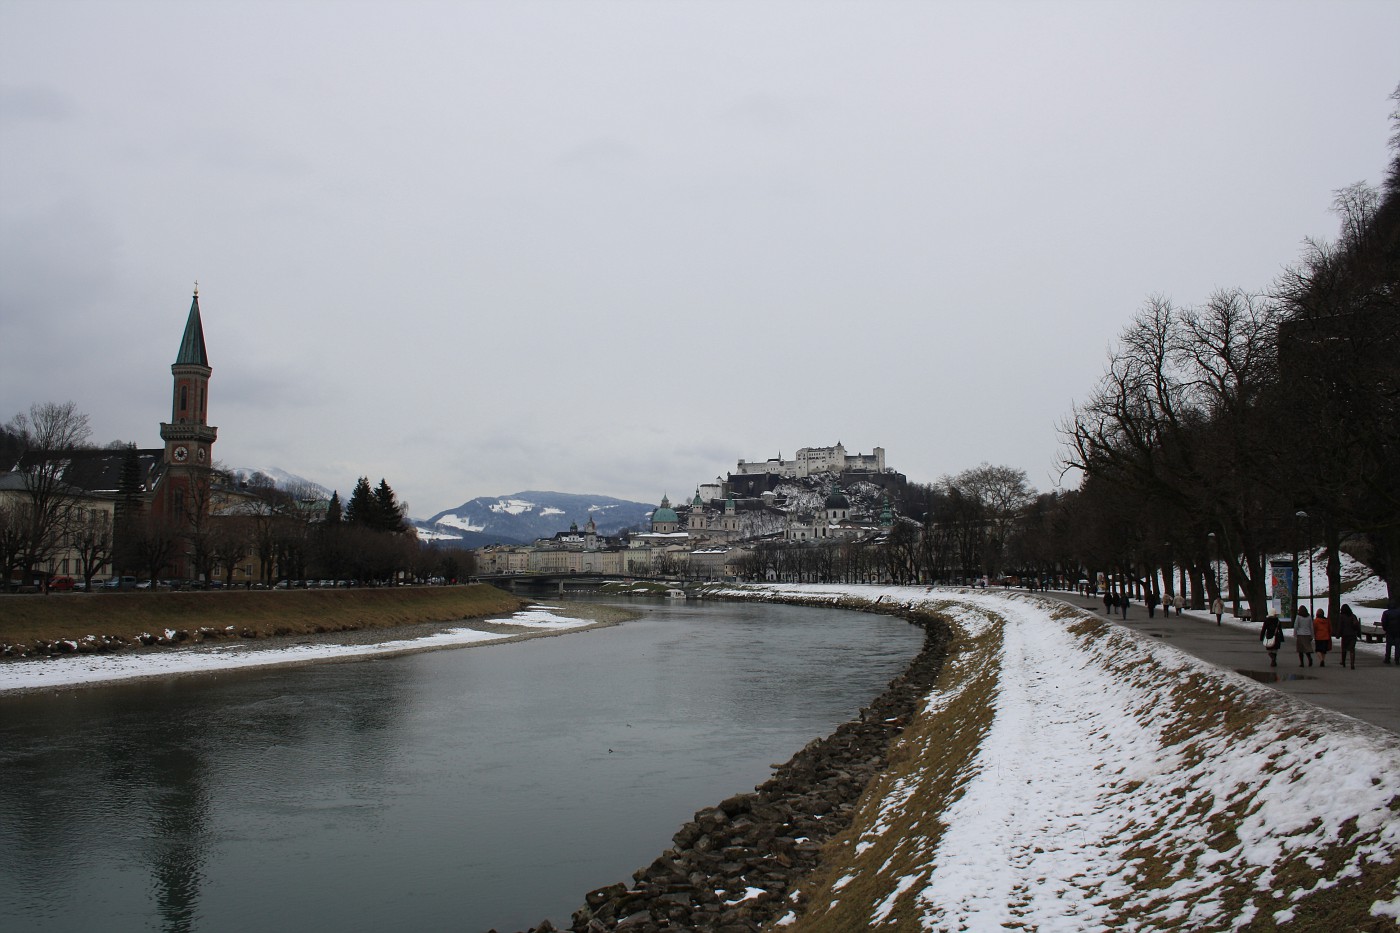 http://images19.fotki.com/v286/photos/2/243162/8488810/Salzburg1-vi.jpg